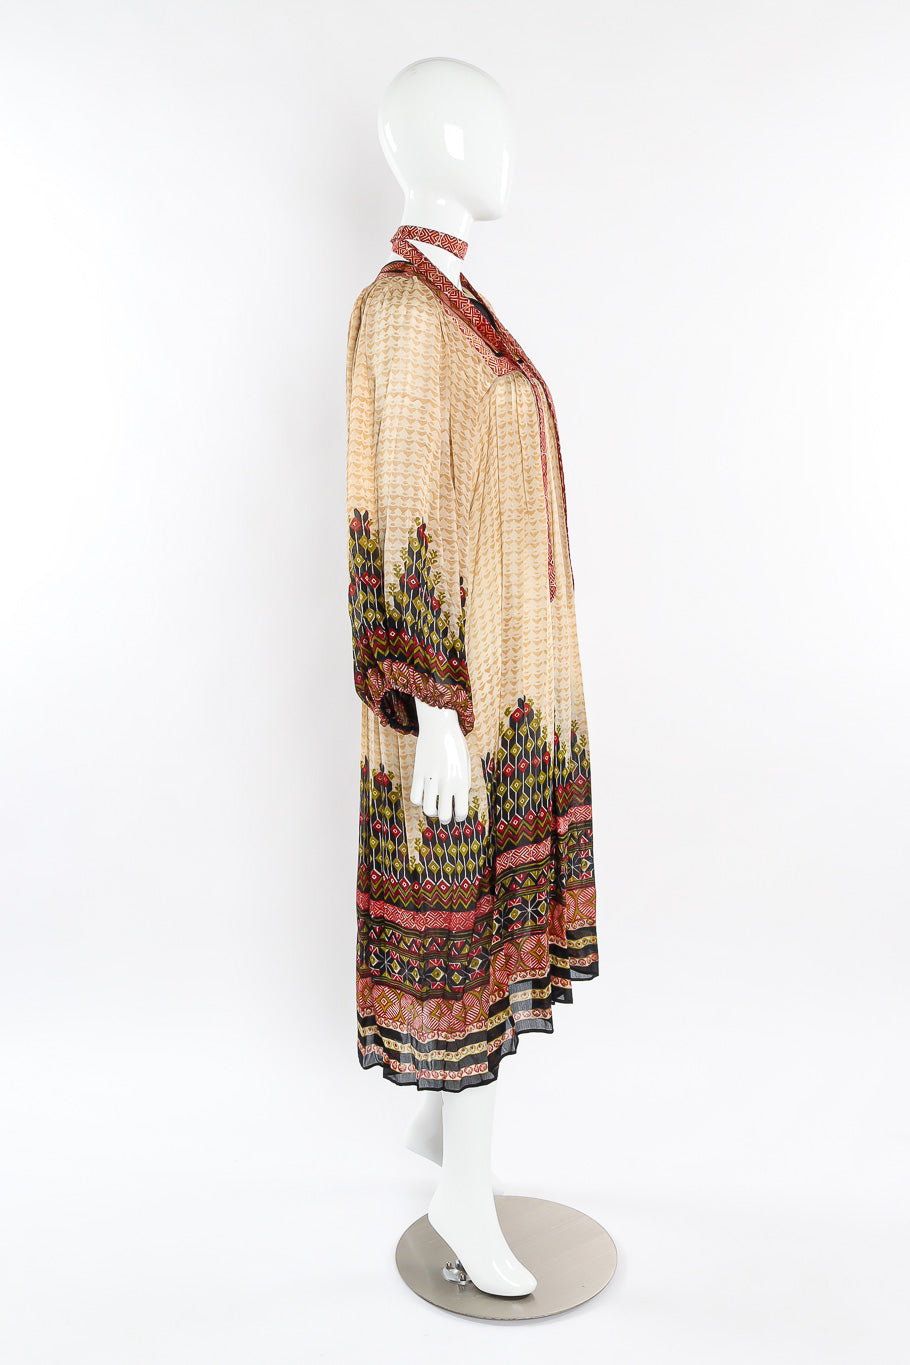 Block print silk dress by Ritu Kumar for Judith Ann Side View. @recessla